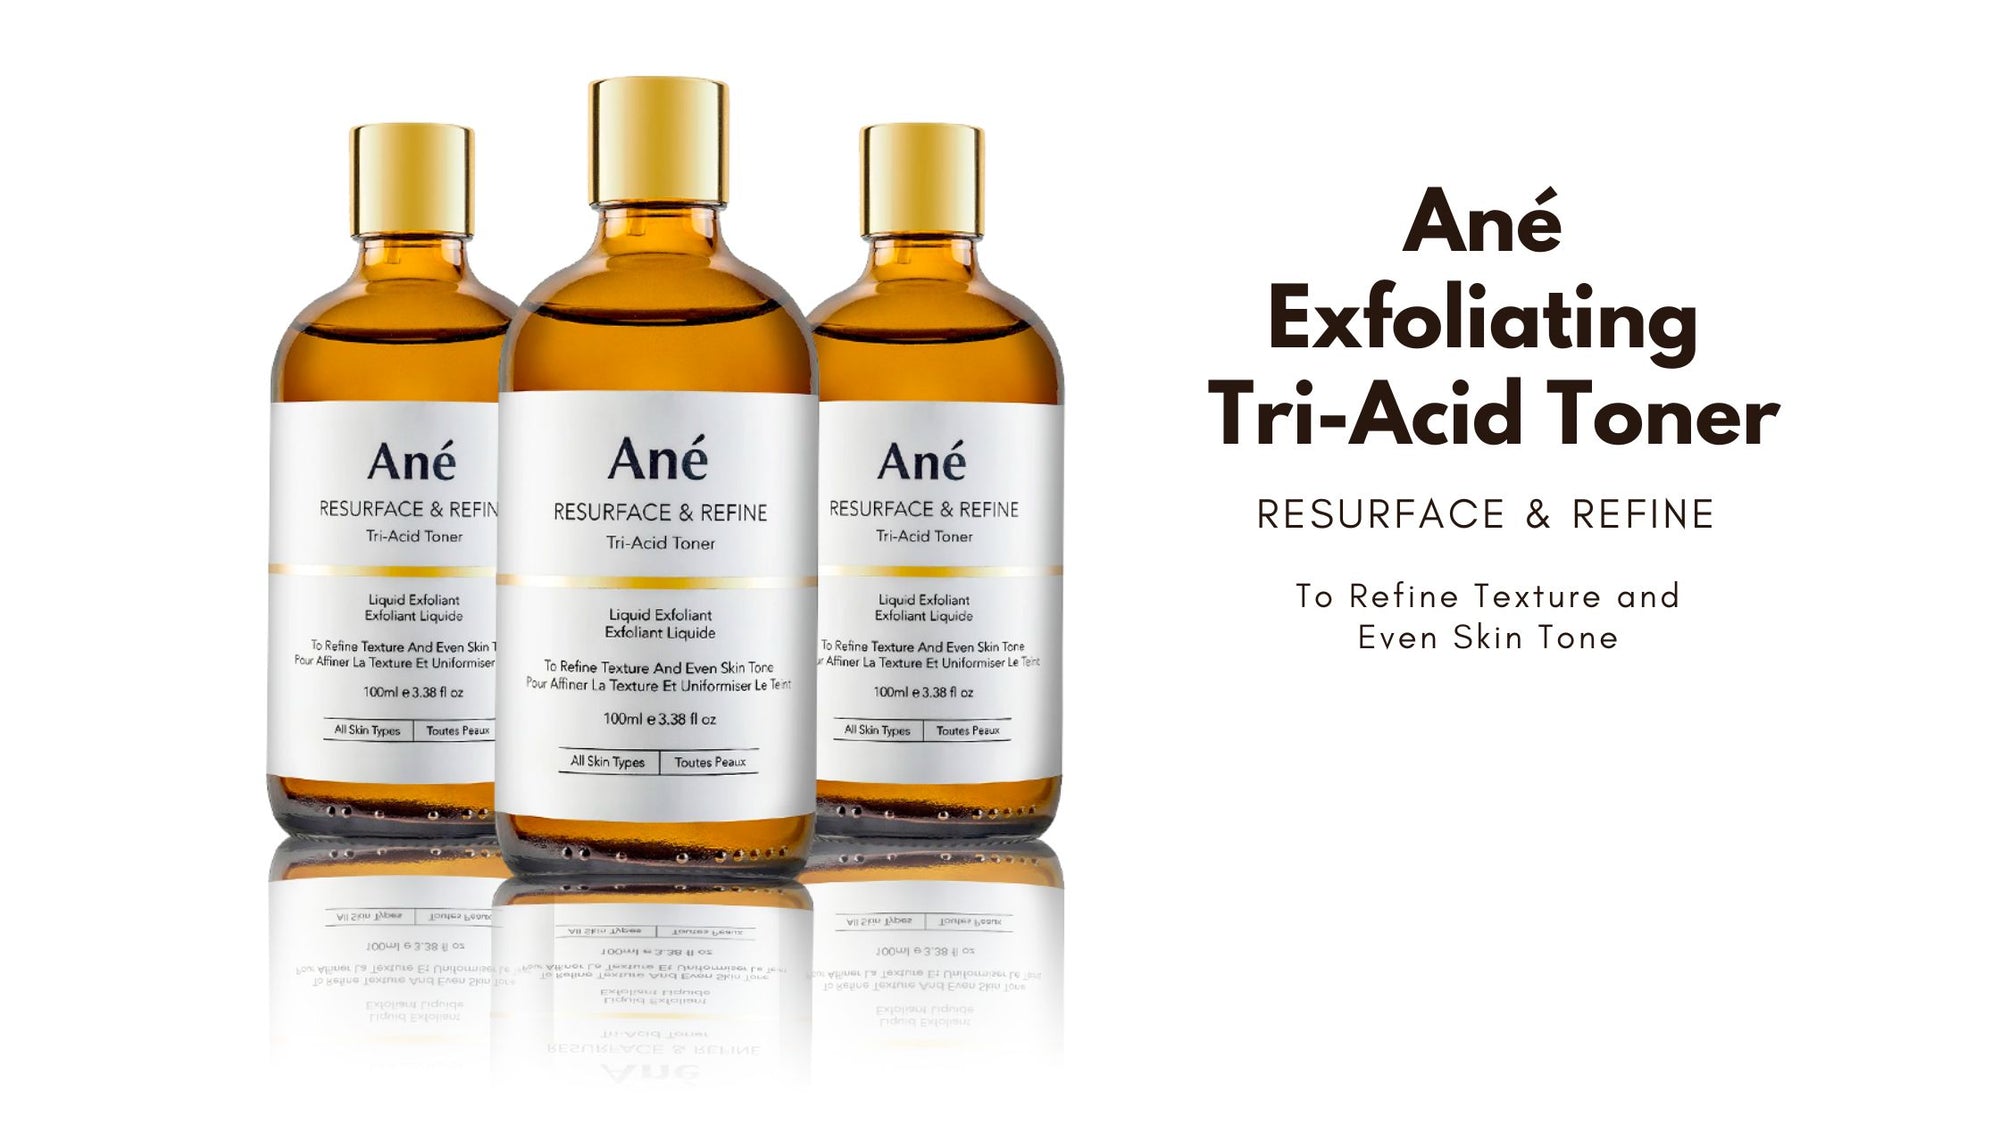 Ané Exfoliating Tri-Acid Toner with Tranexamic Acid, AHA and BHA